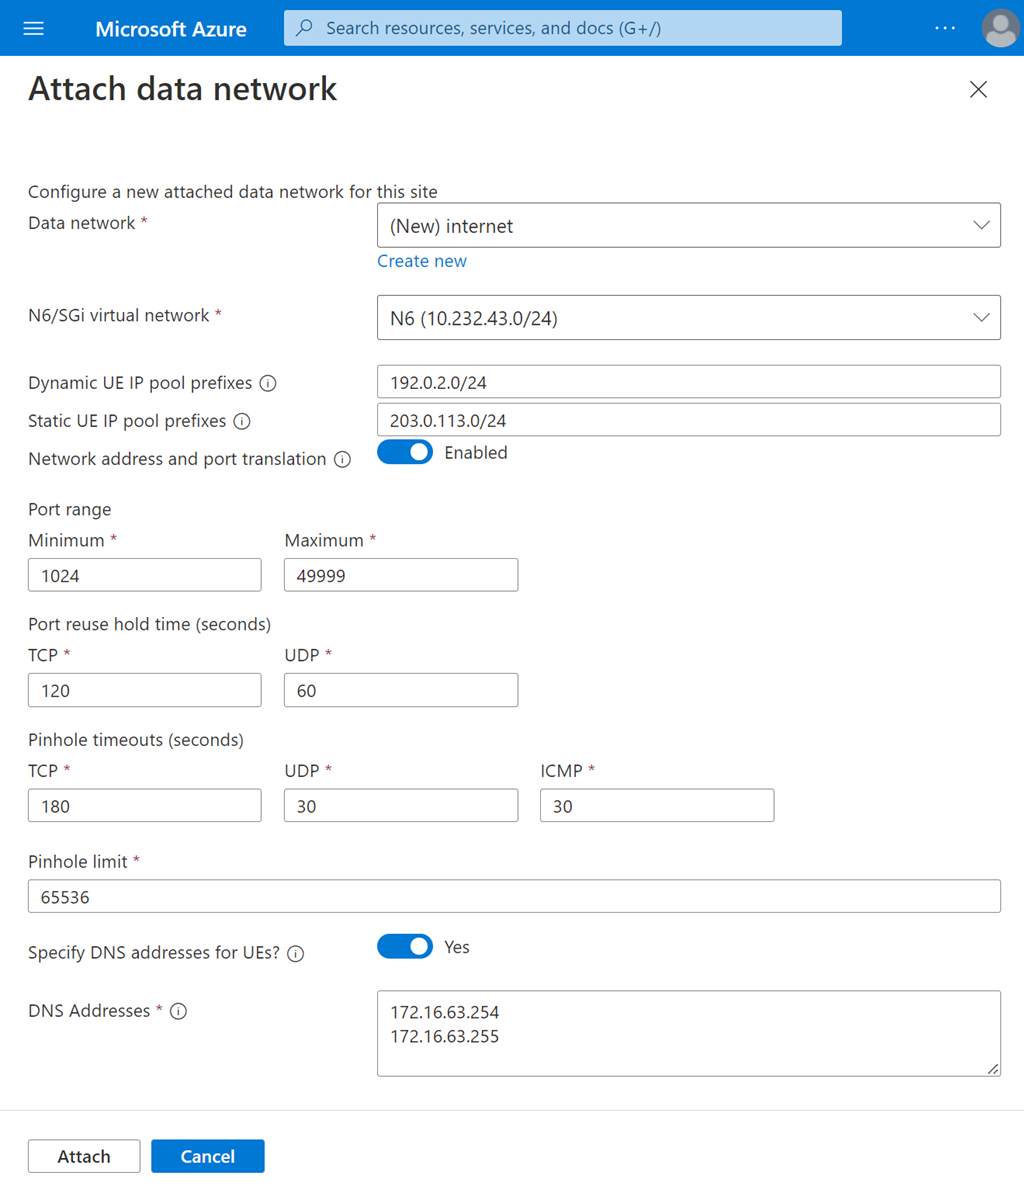 Screenshot of the Azure portal showing the Attach data network screen.